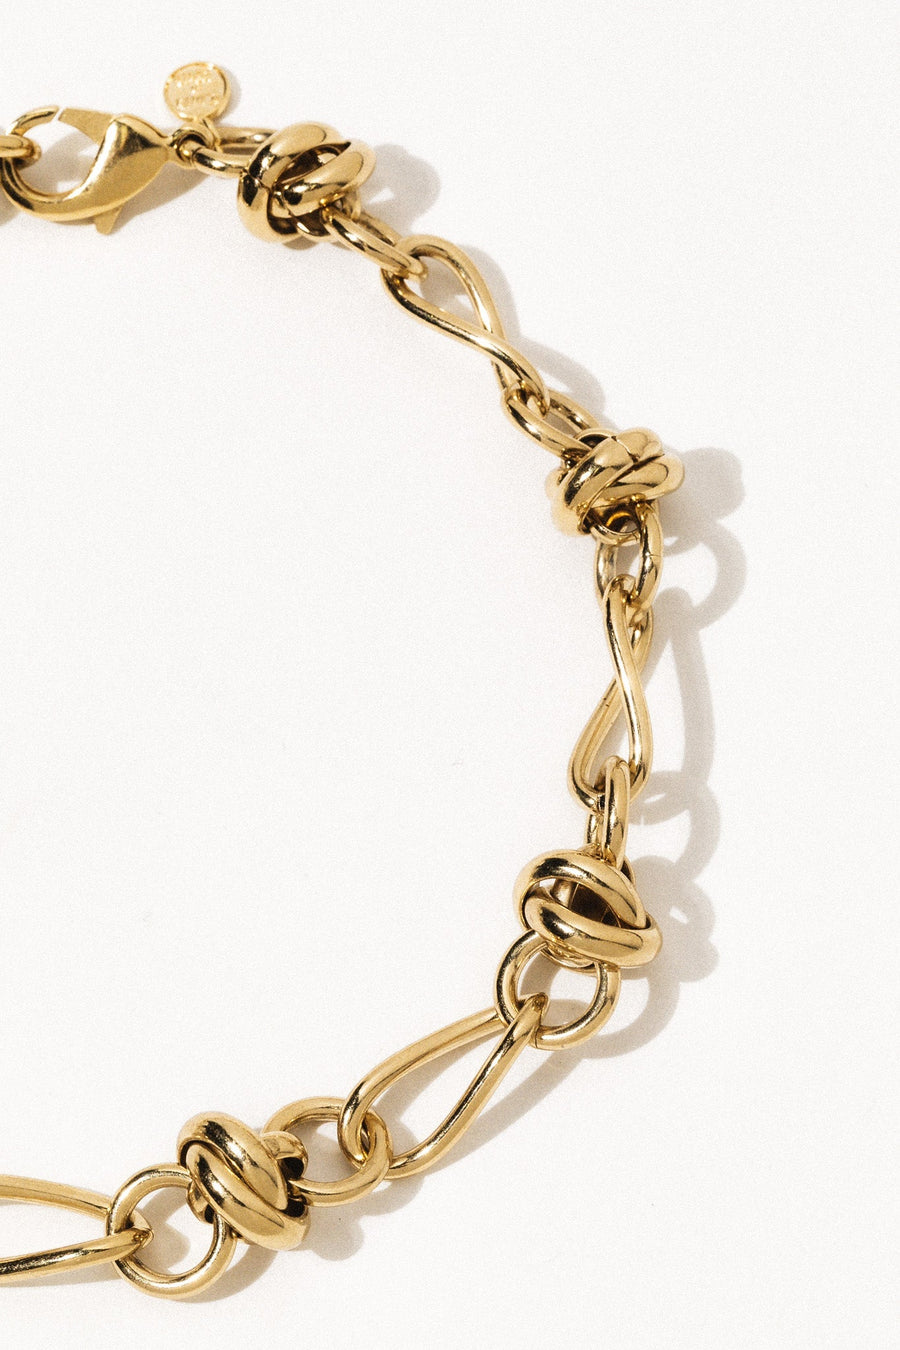 Goddess Jewelry Gold / 15 Inches Nefertari Chain Necklace